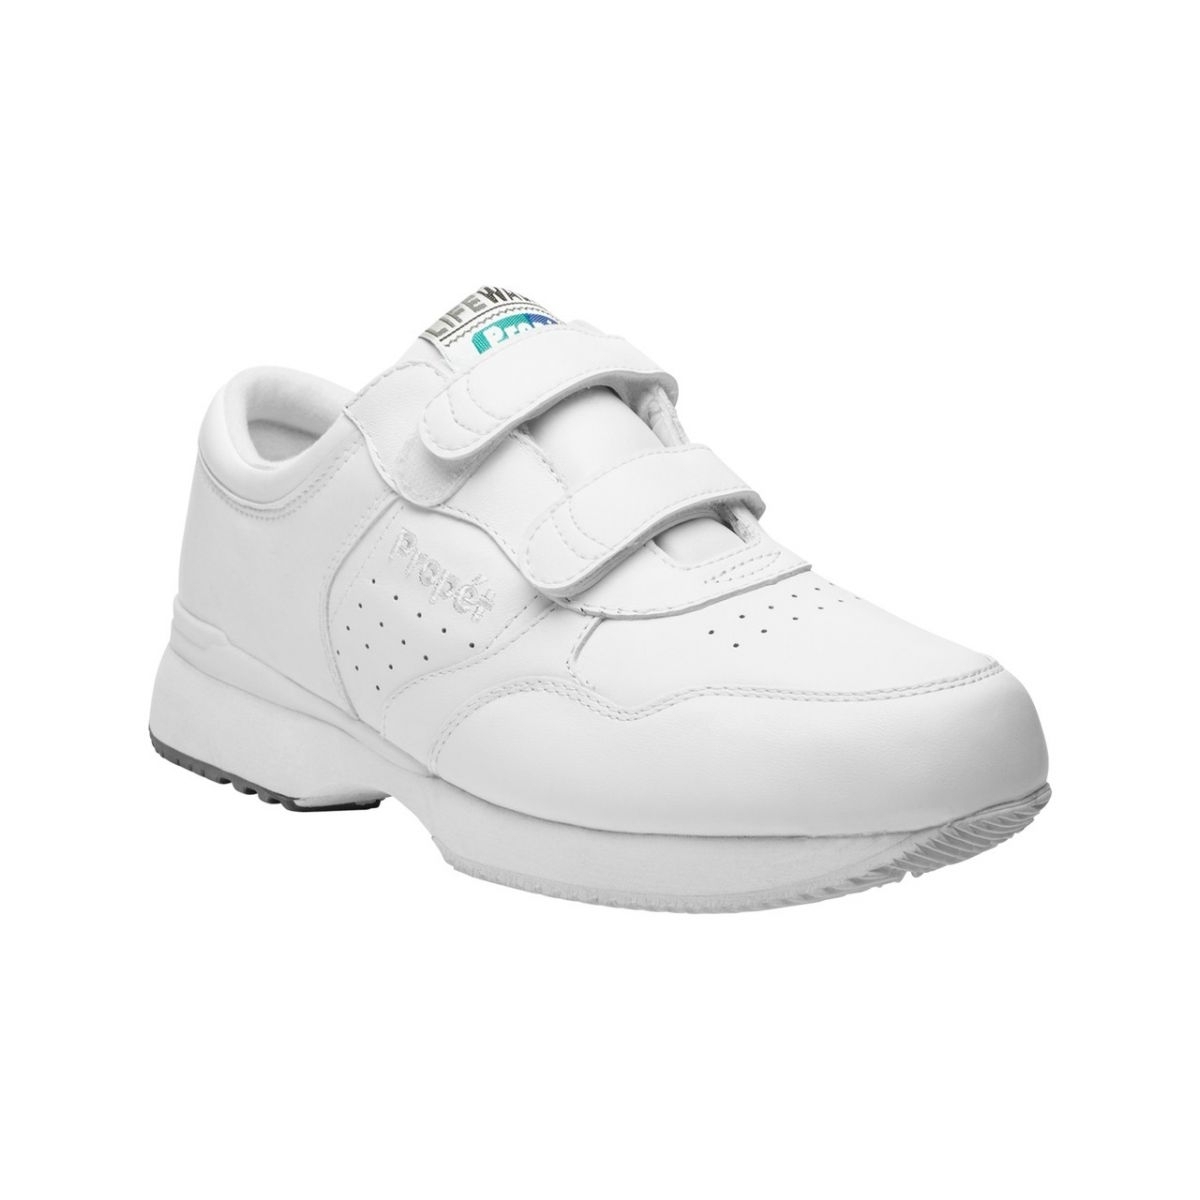 Propet Men's Life Walker Strap Shoe White - M3705WHT WHITE - WHITE, 18 Wide